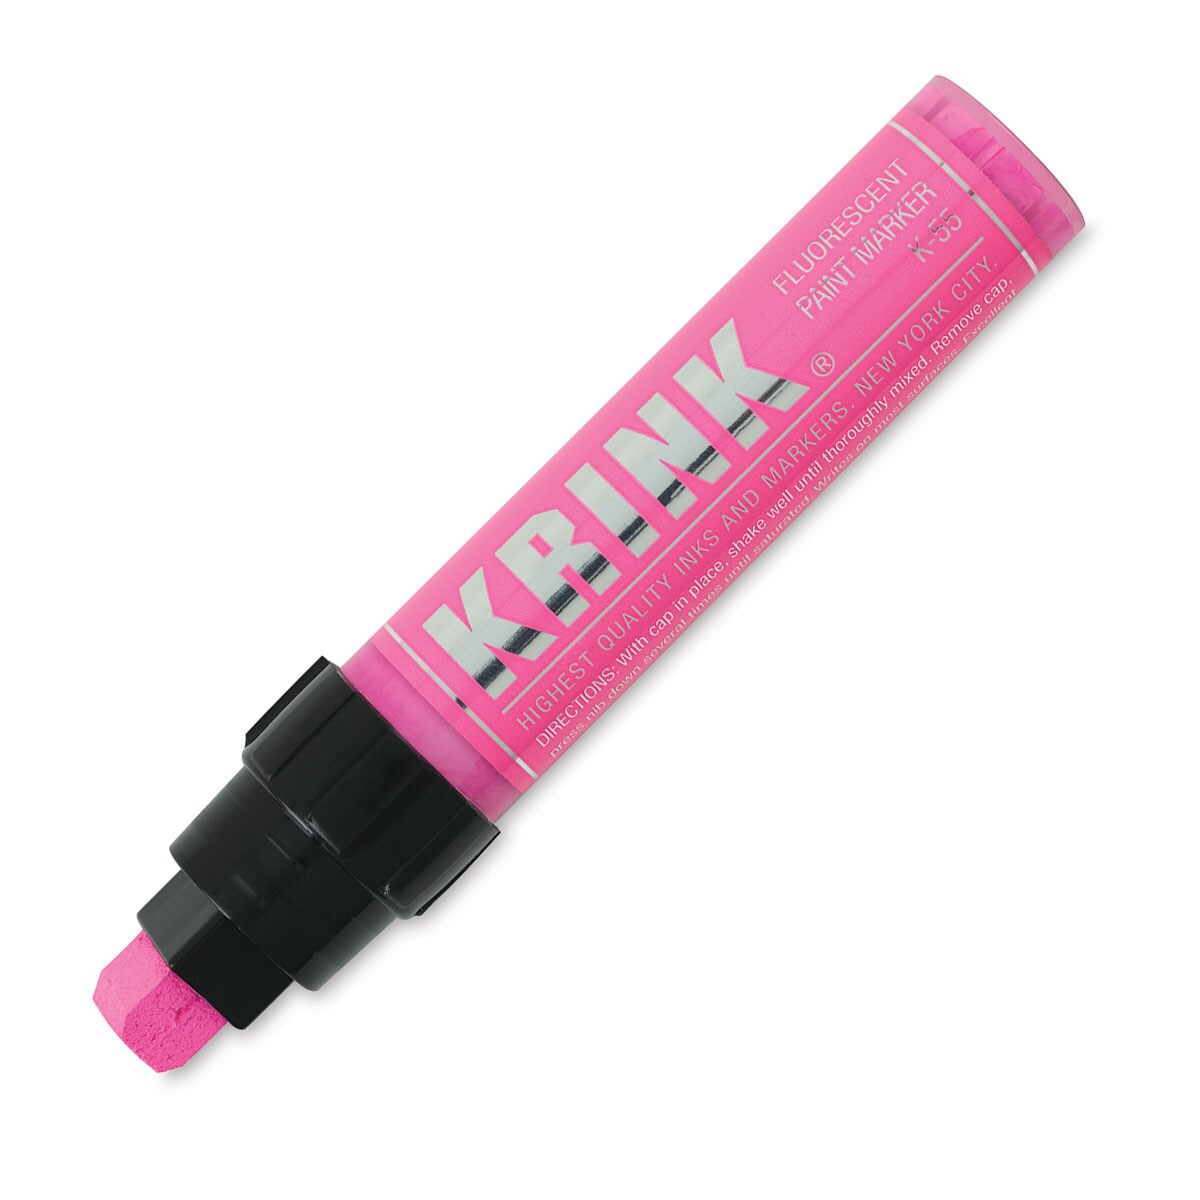 Krink K-55 Paint Marker - Fluorescent Pink